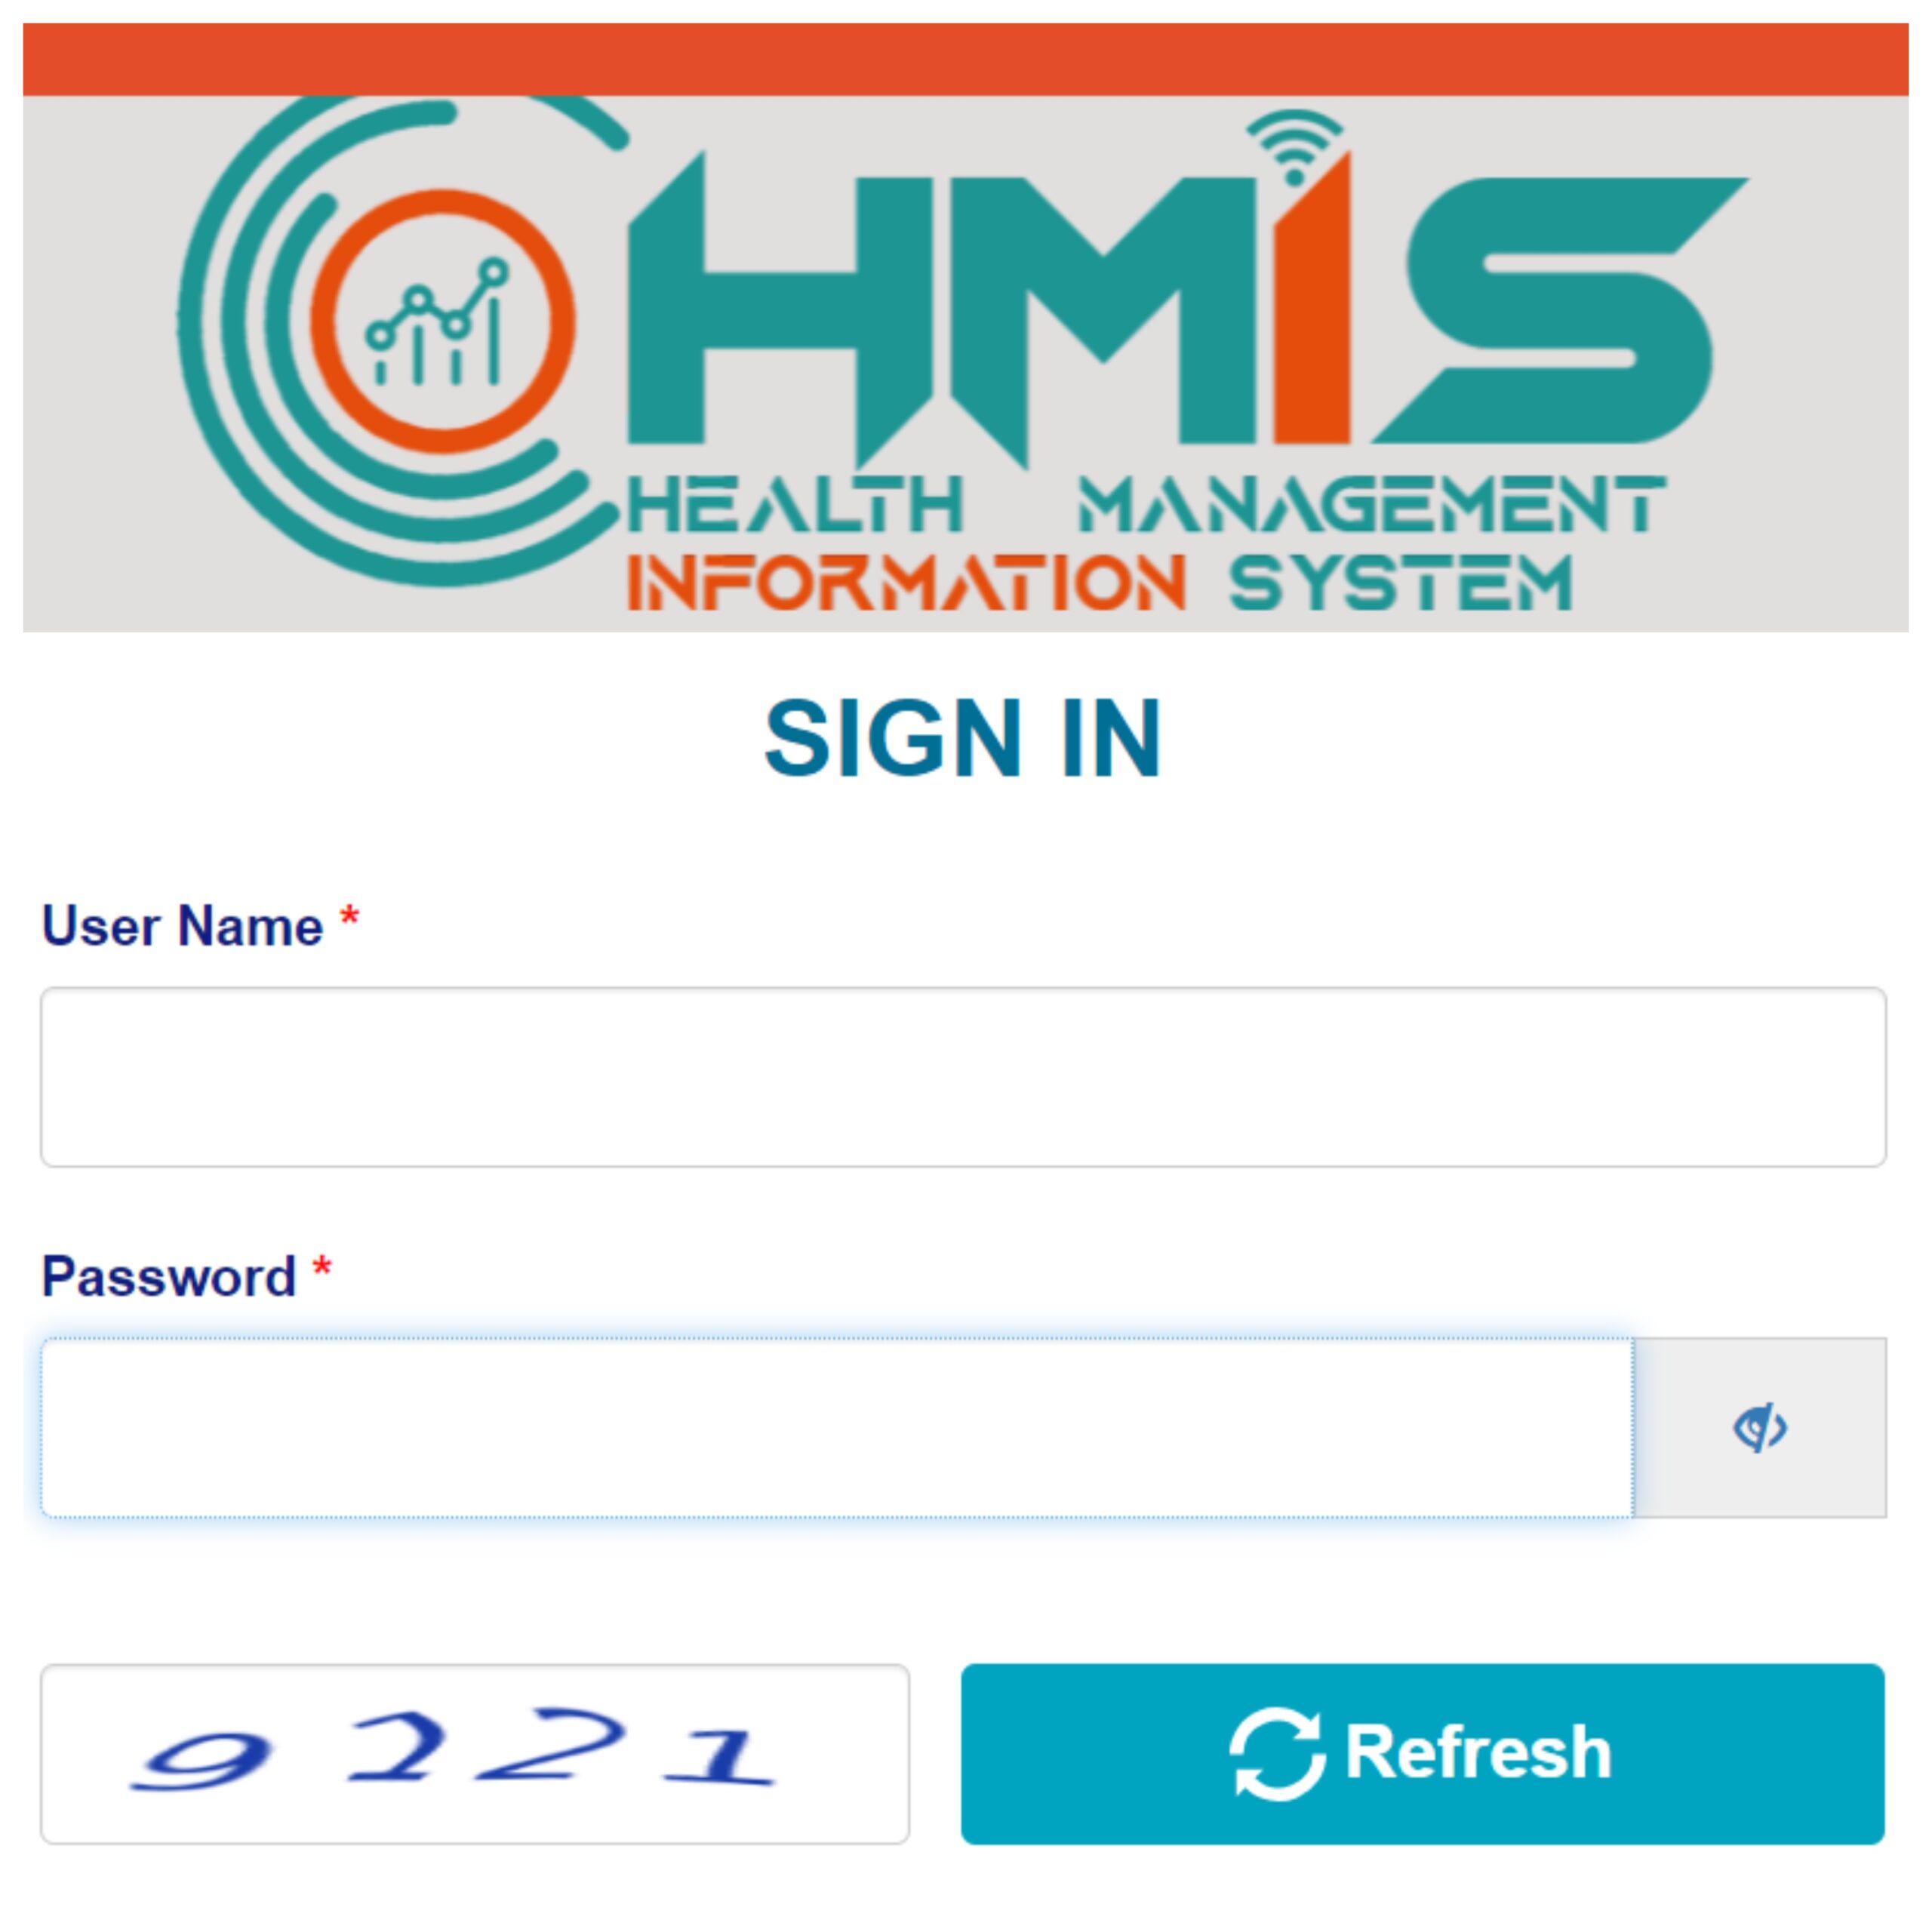 HMIS Op registration